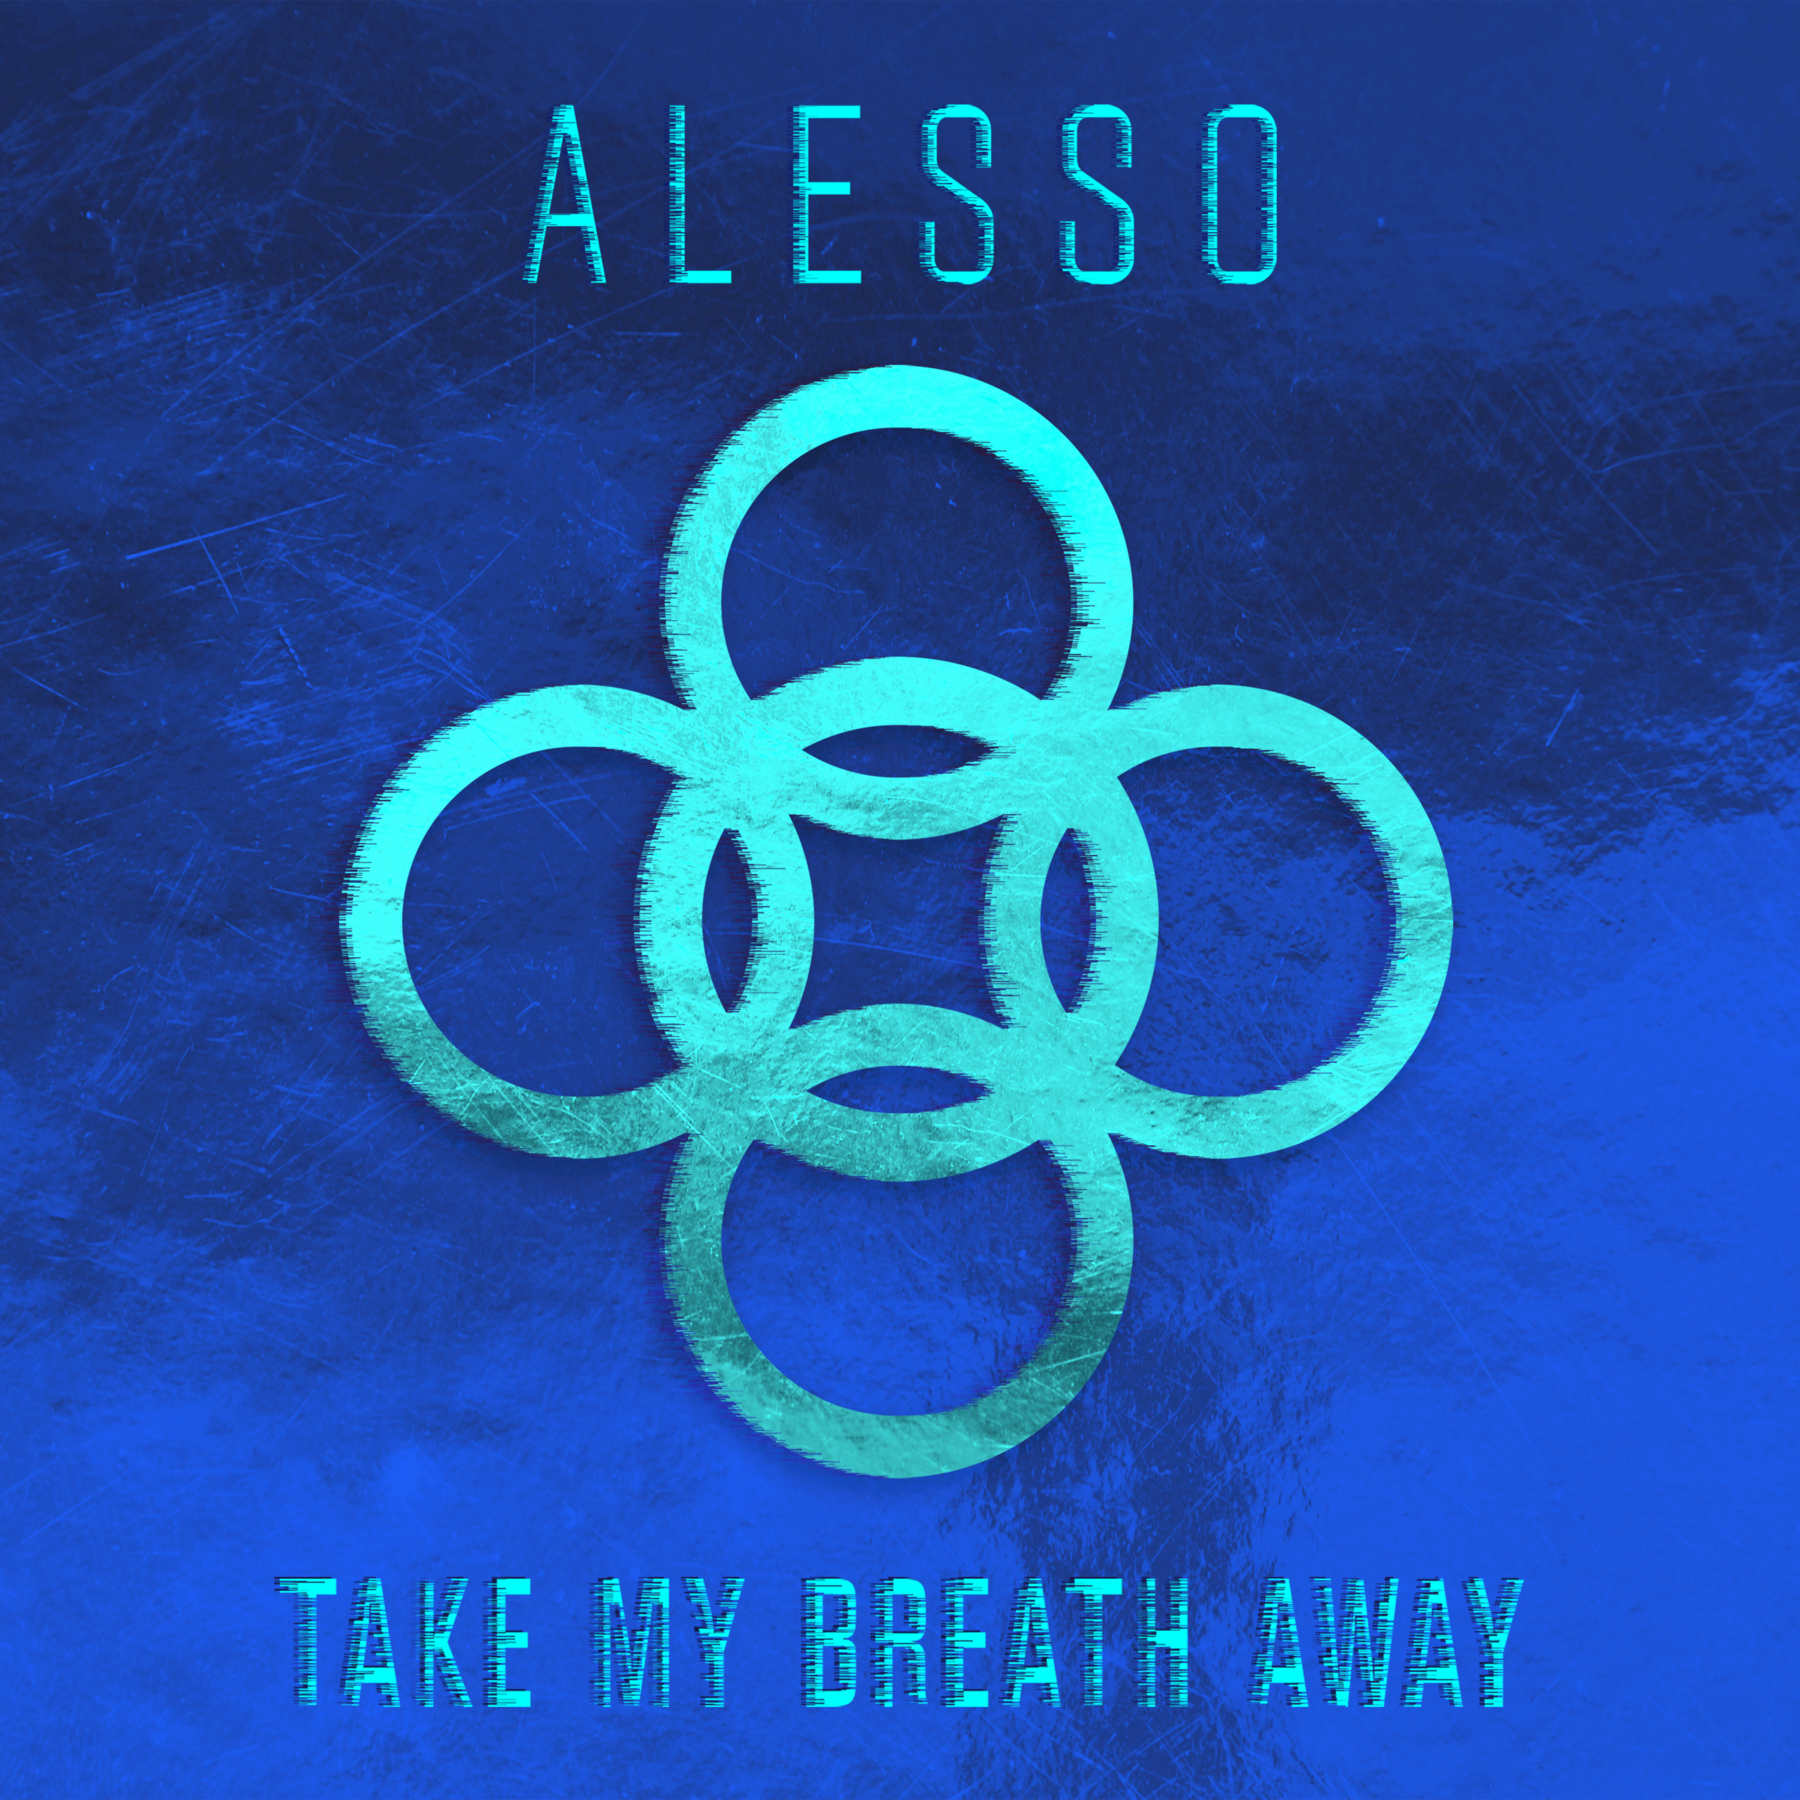 Take my breath away(Alesso)